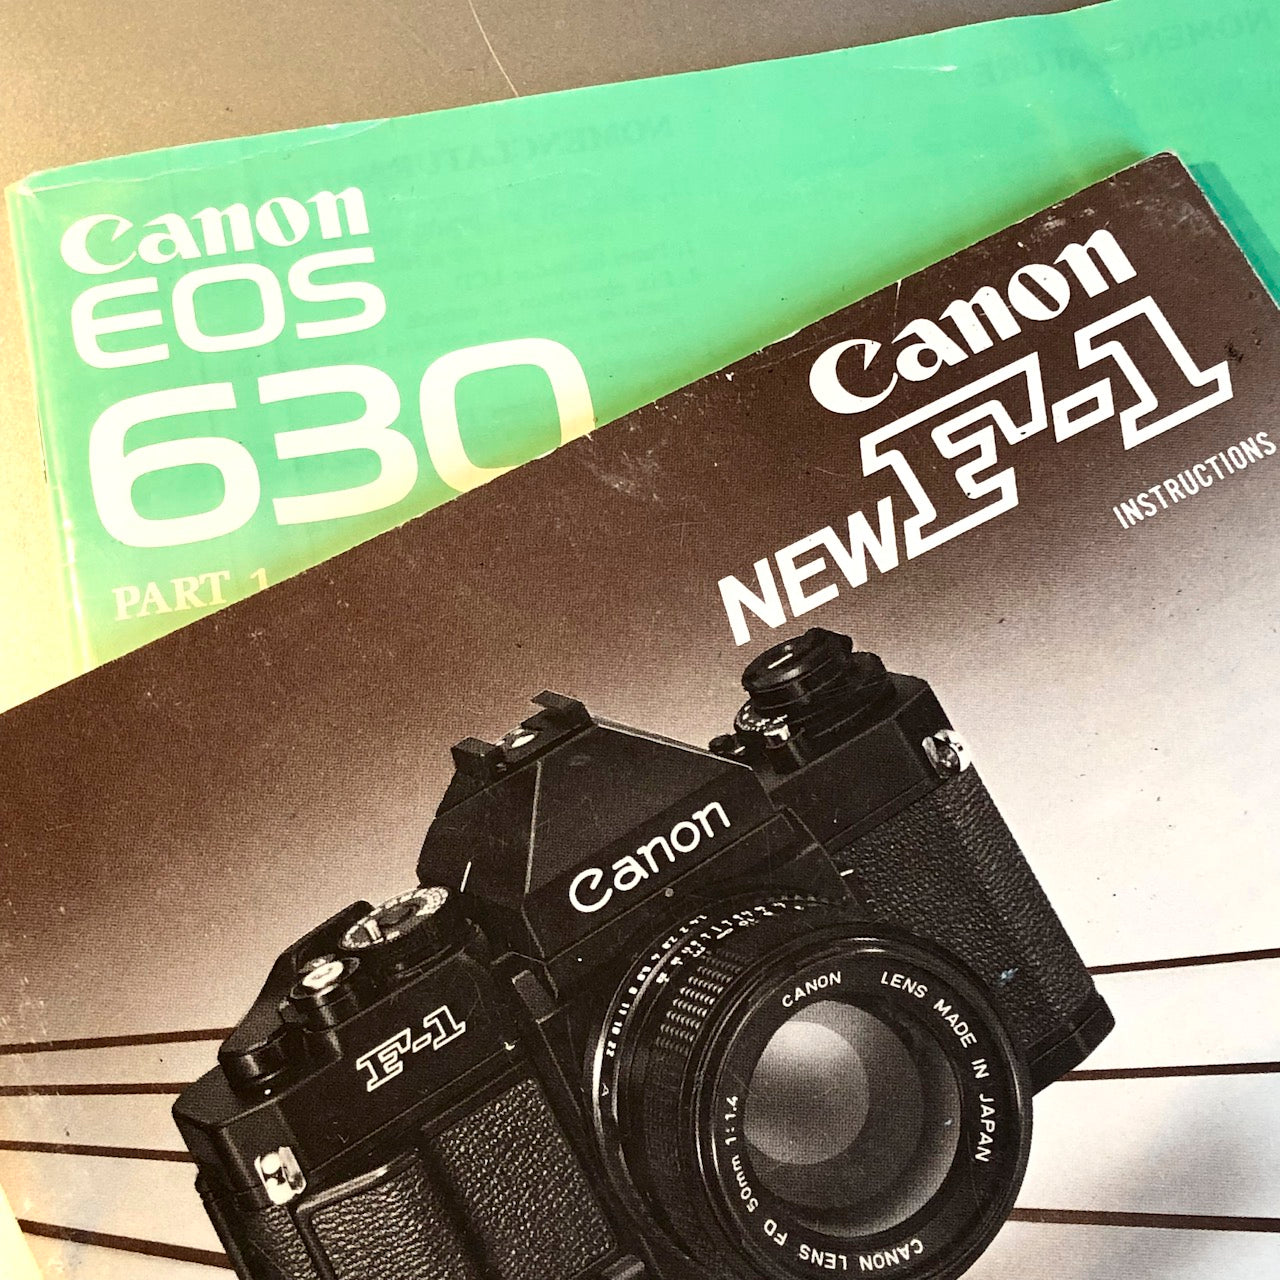 Canon Instruction Manuals